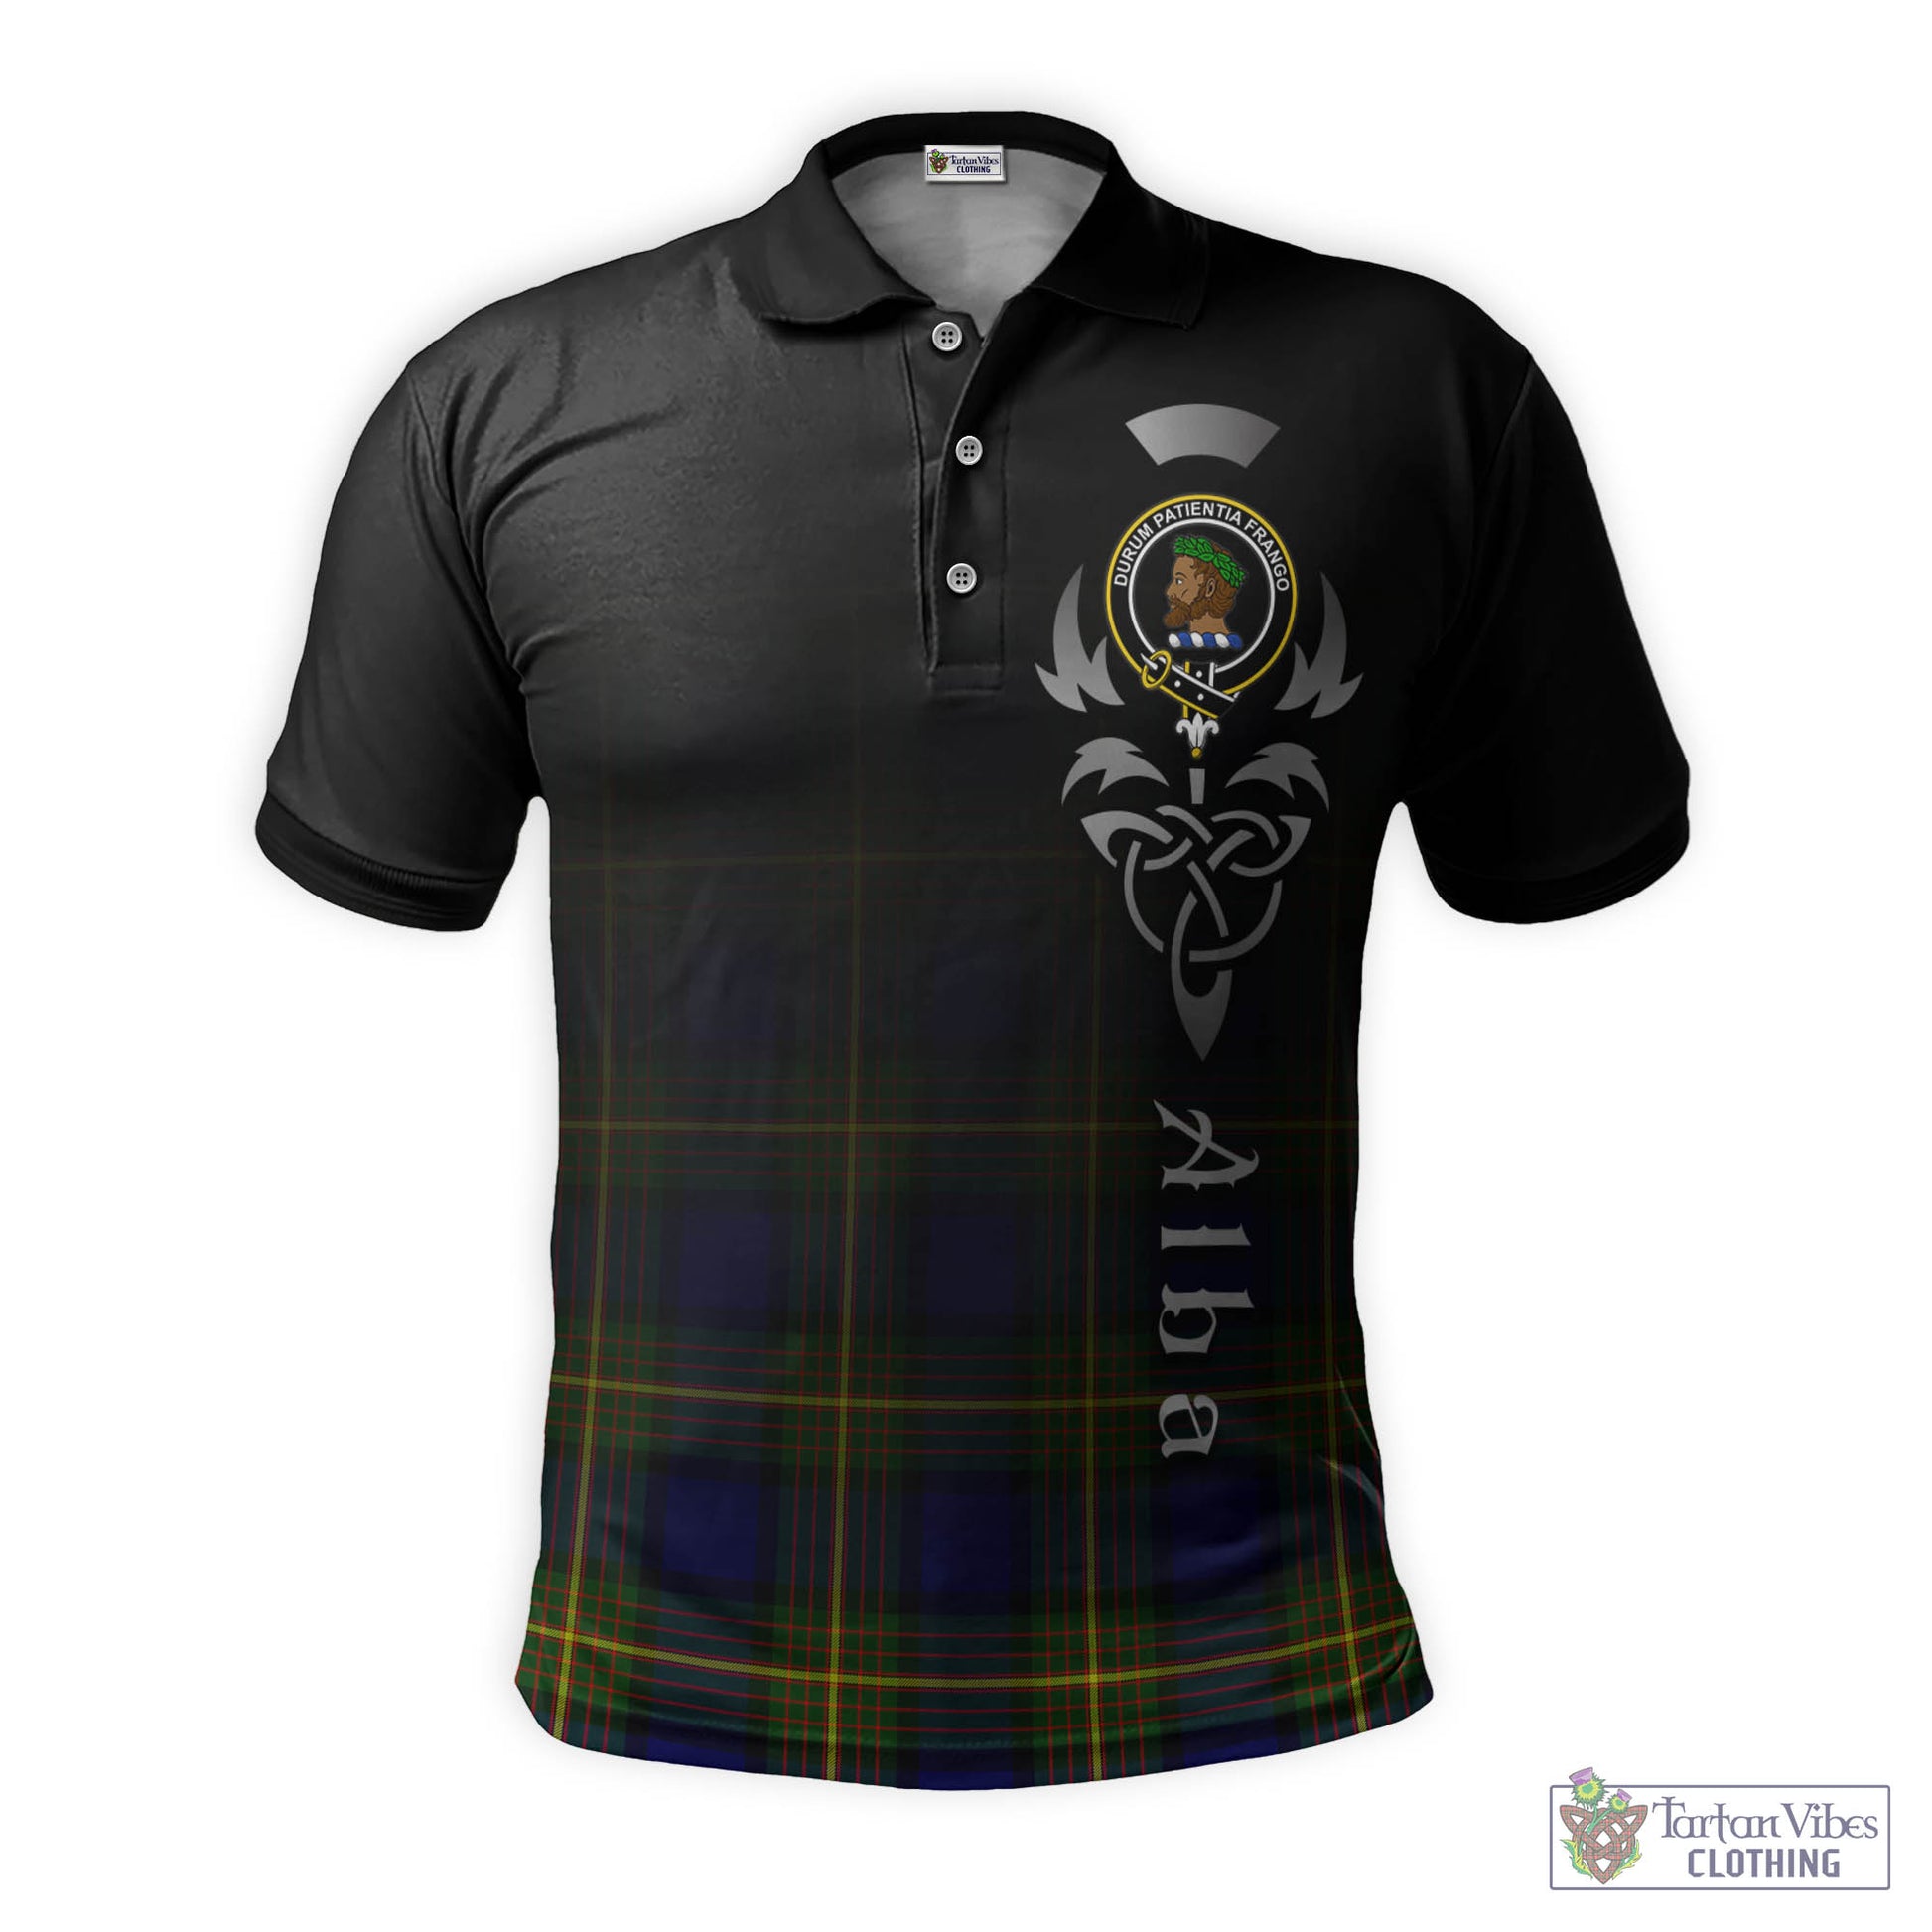 Tartan Vibes Clothing Moore Tartan Polo Shirt Featuring Alba Gu Brath Family Crest Celtic Inspired